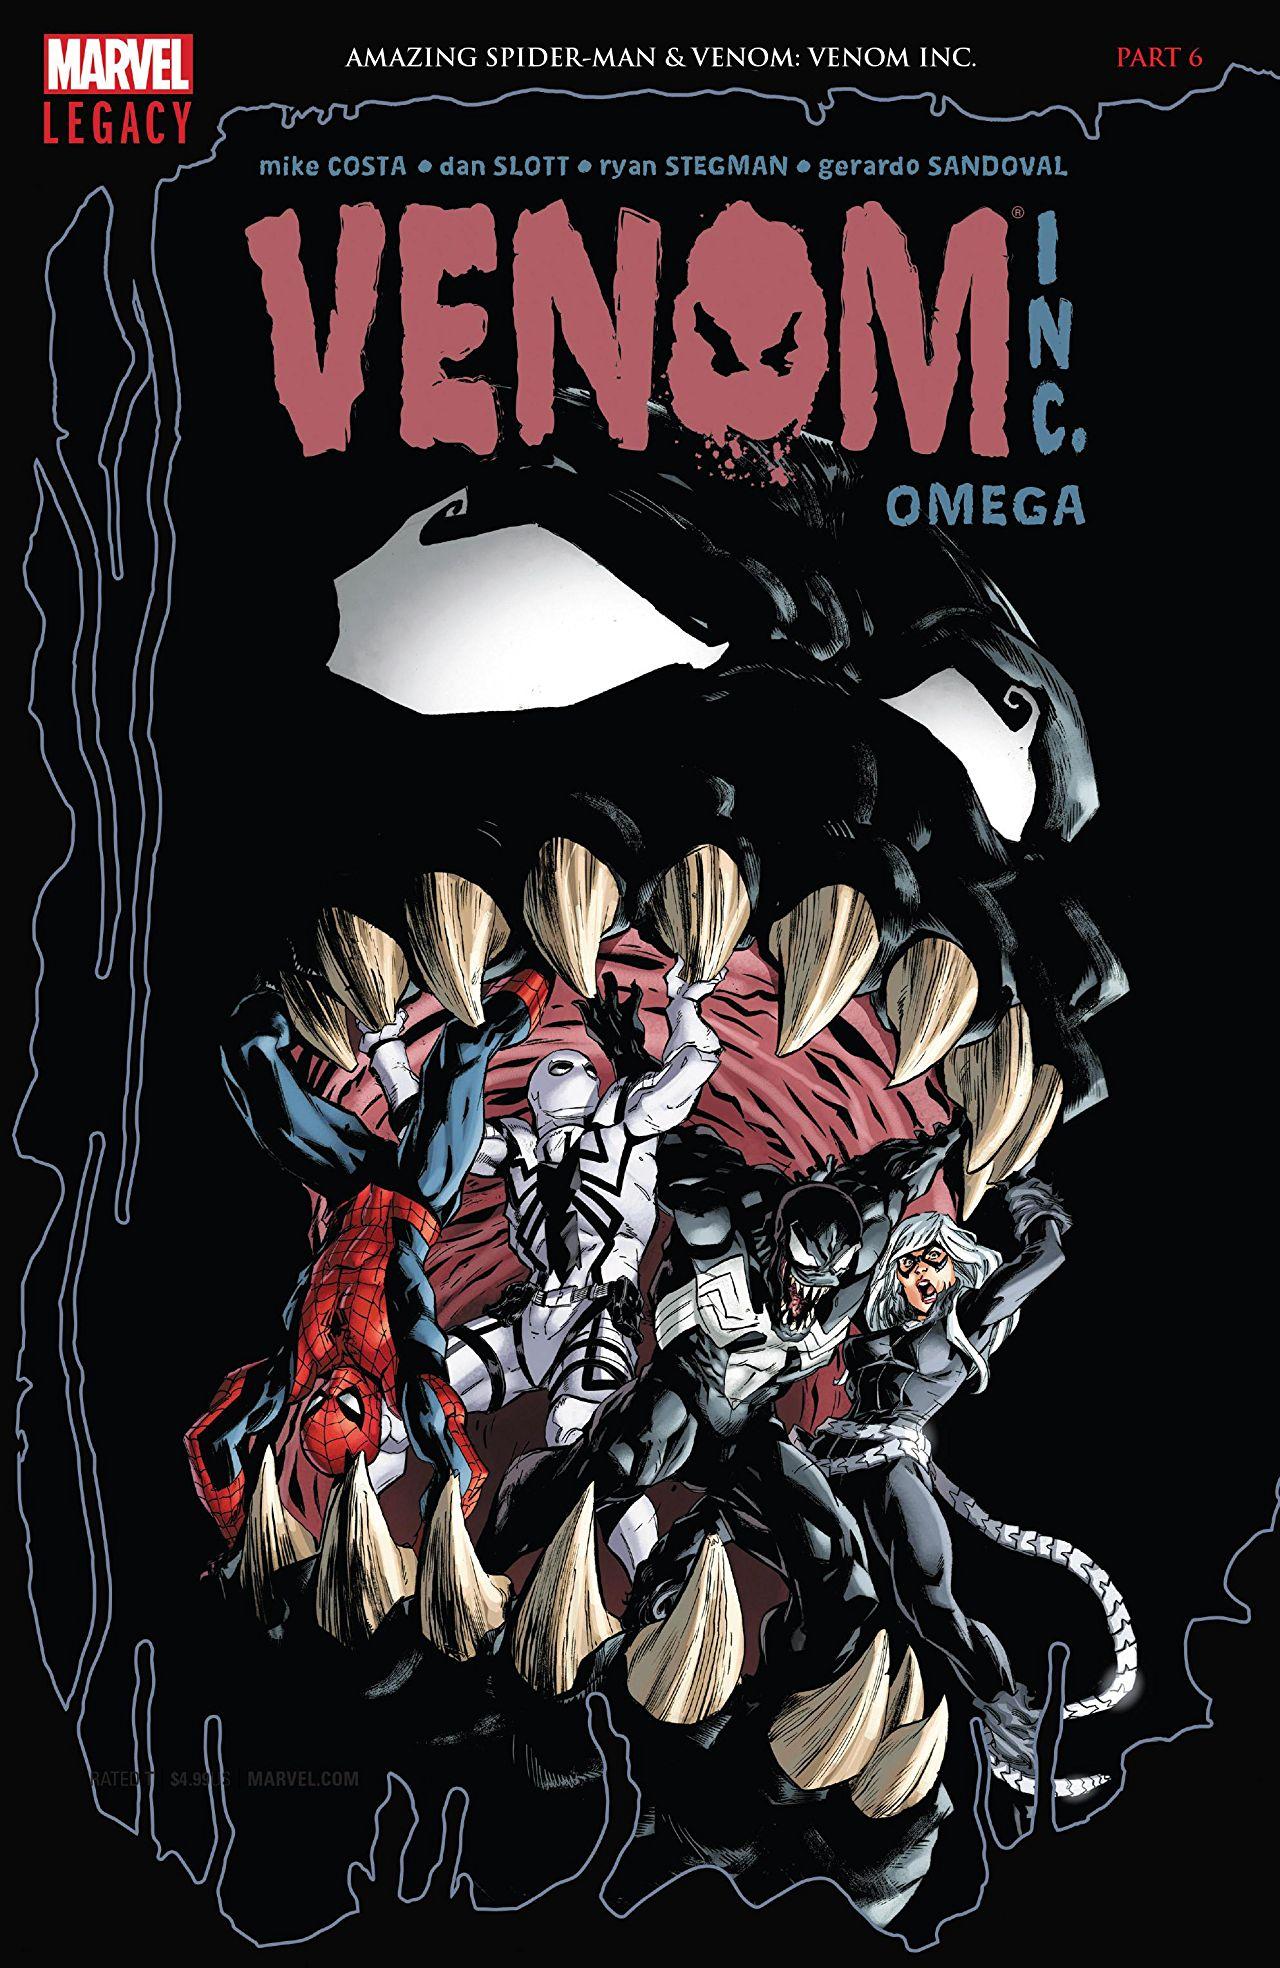 Amazing Spider-Man: Venom Inc. Omega Vol. 1 #1